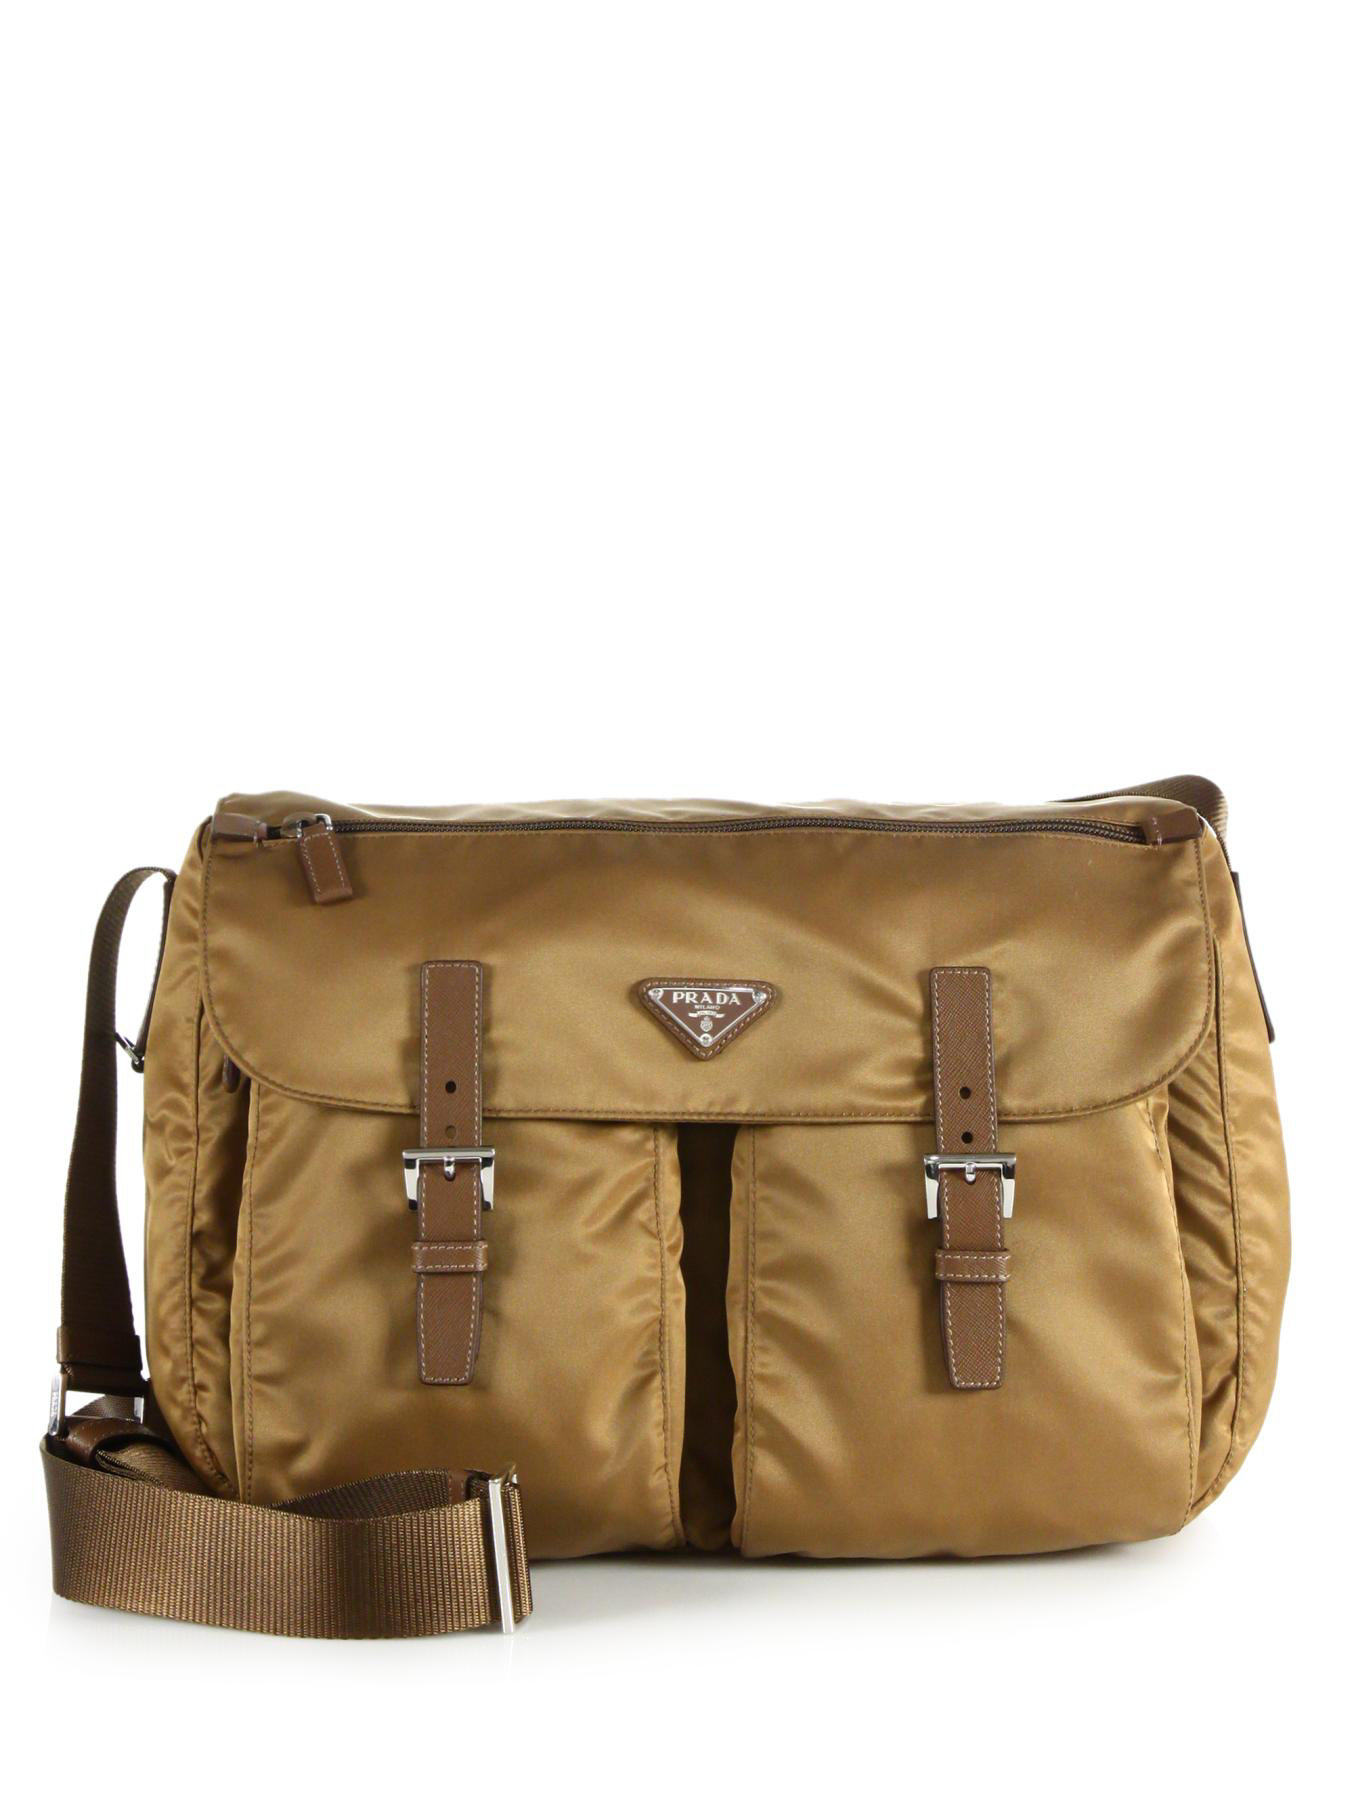 prada pocketbooks handbags - prada braclet wrist bag